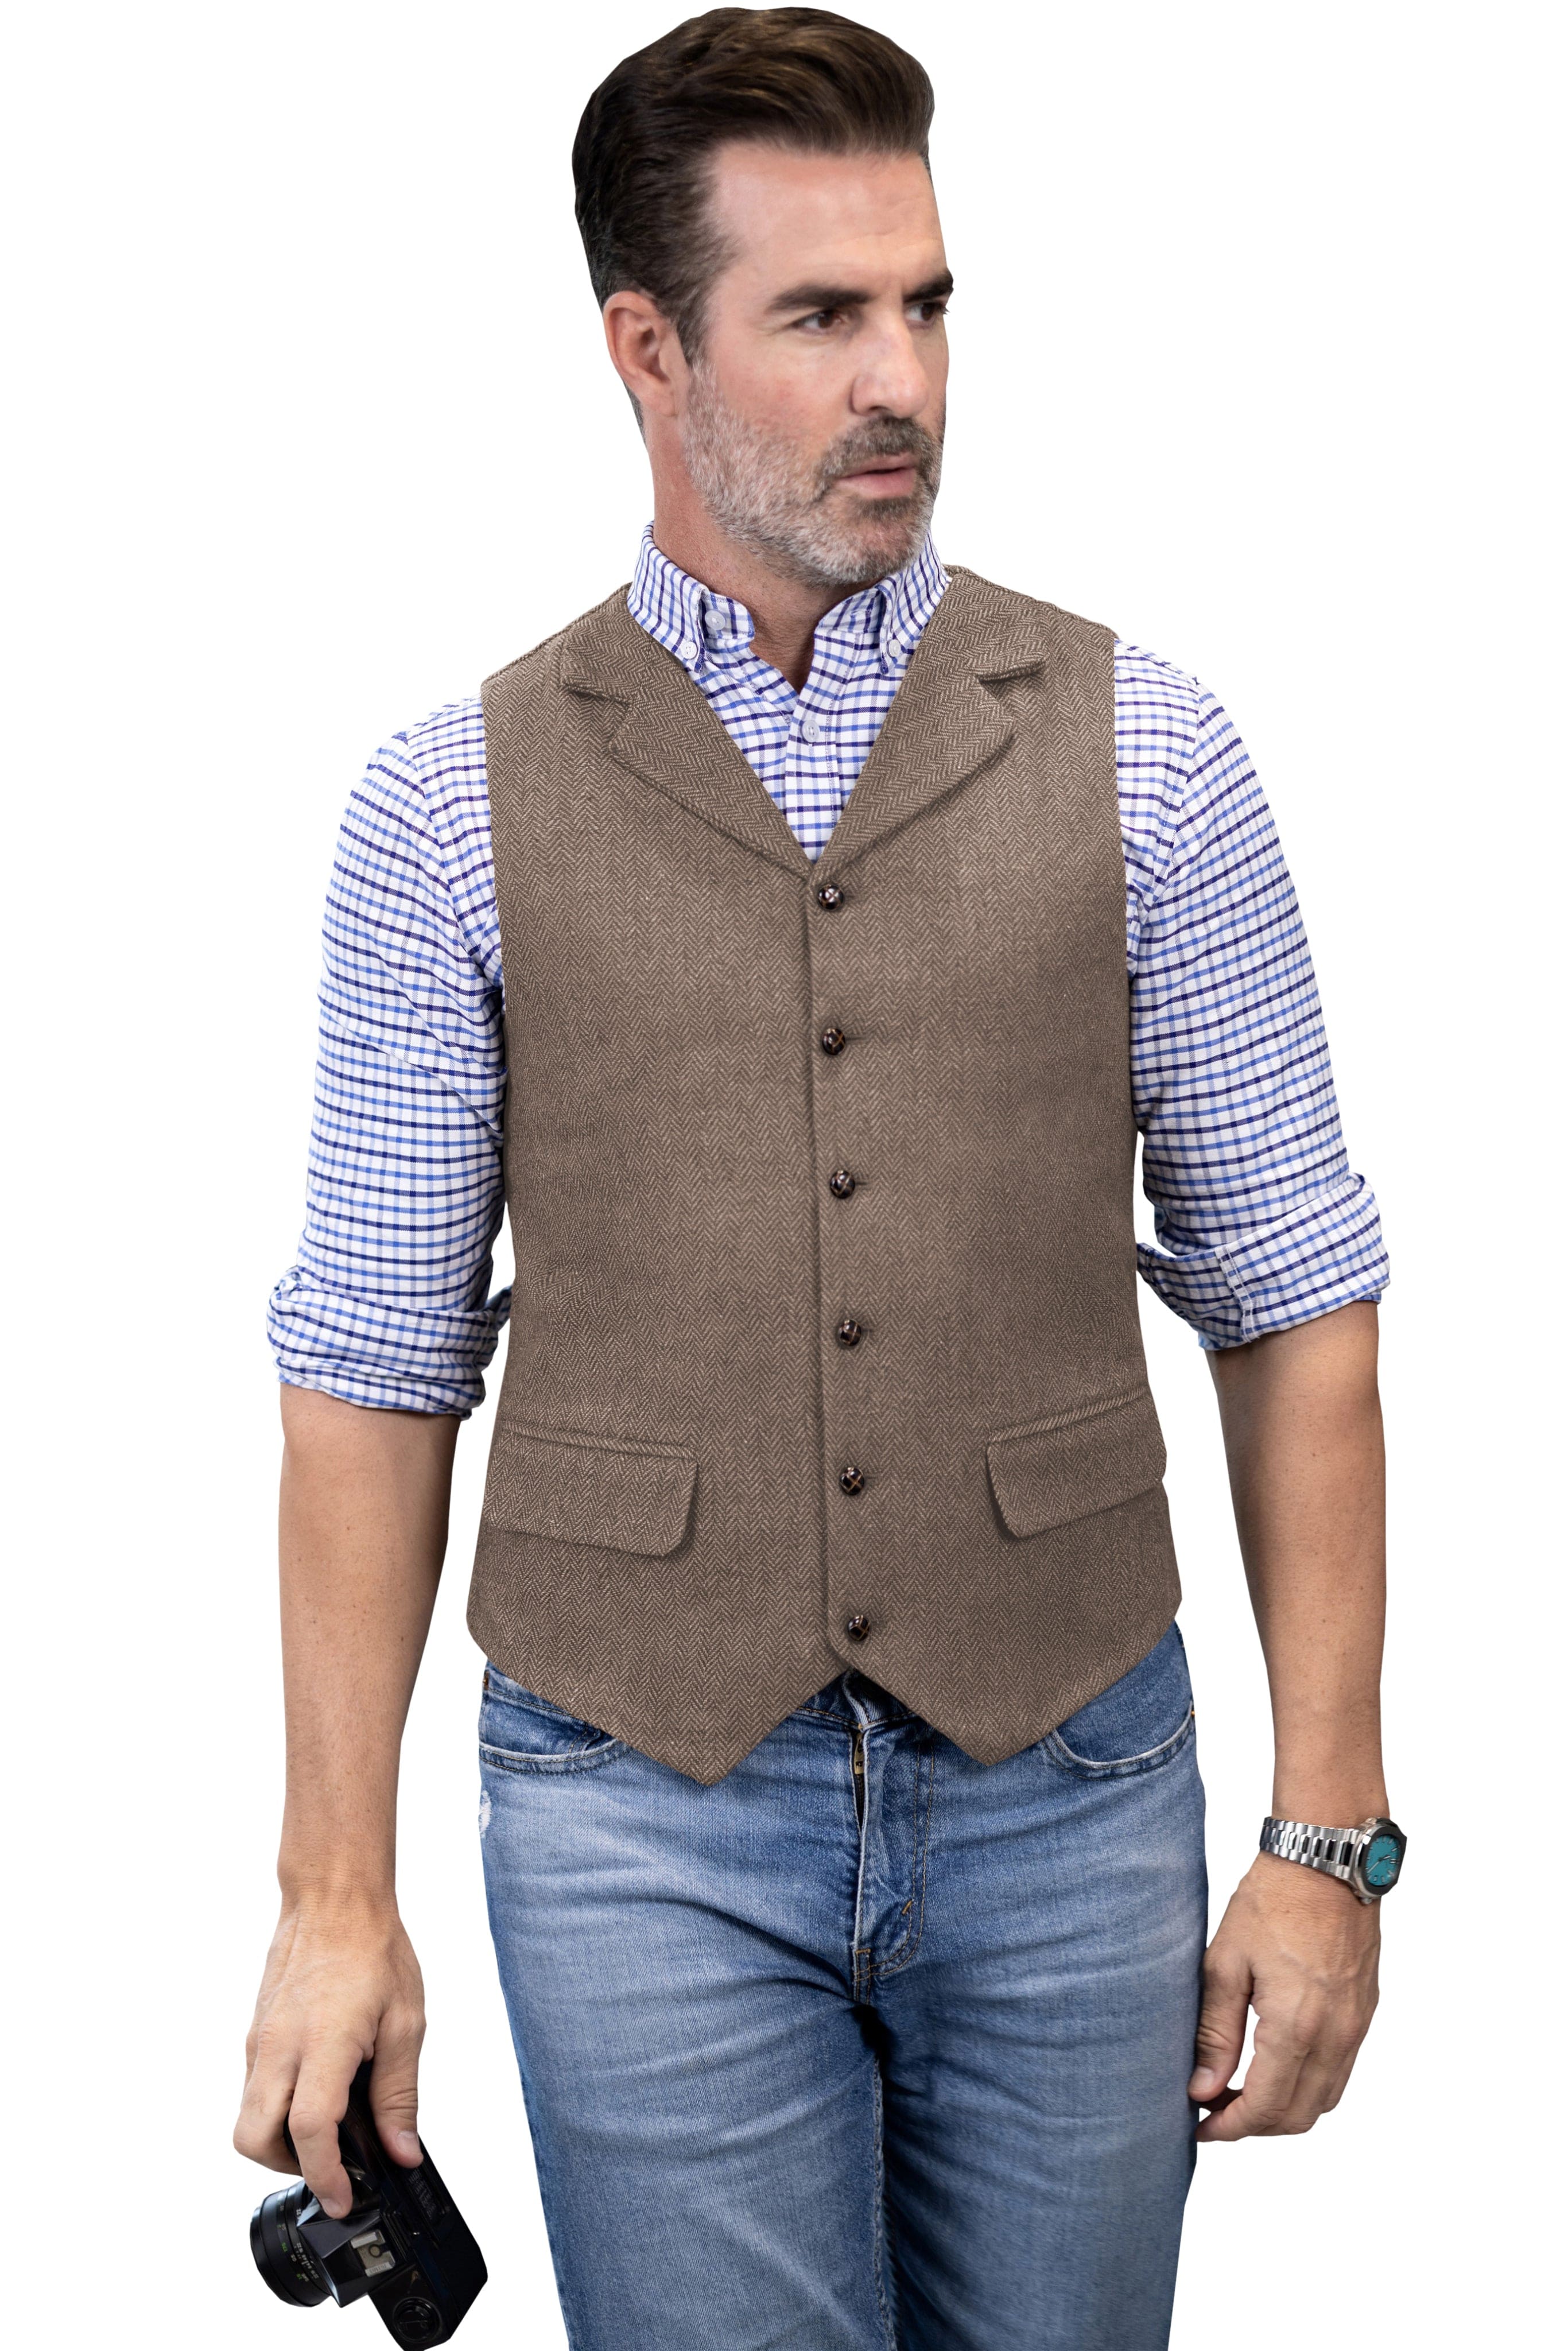 ceehuteey Men's Casual Vest Tweed Herringbone  Notch Lapel Waistcoat